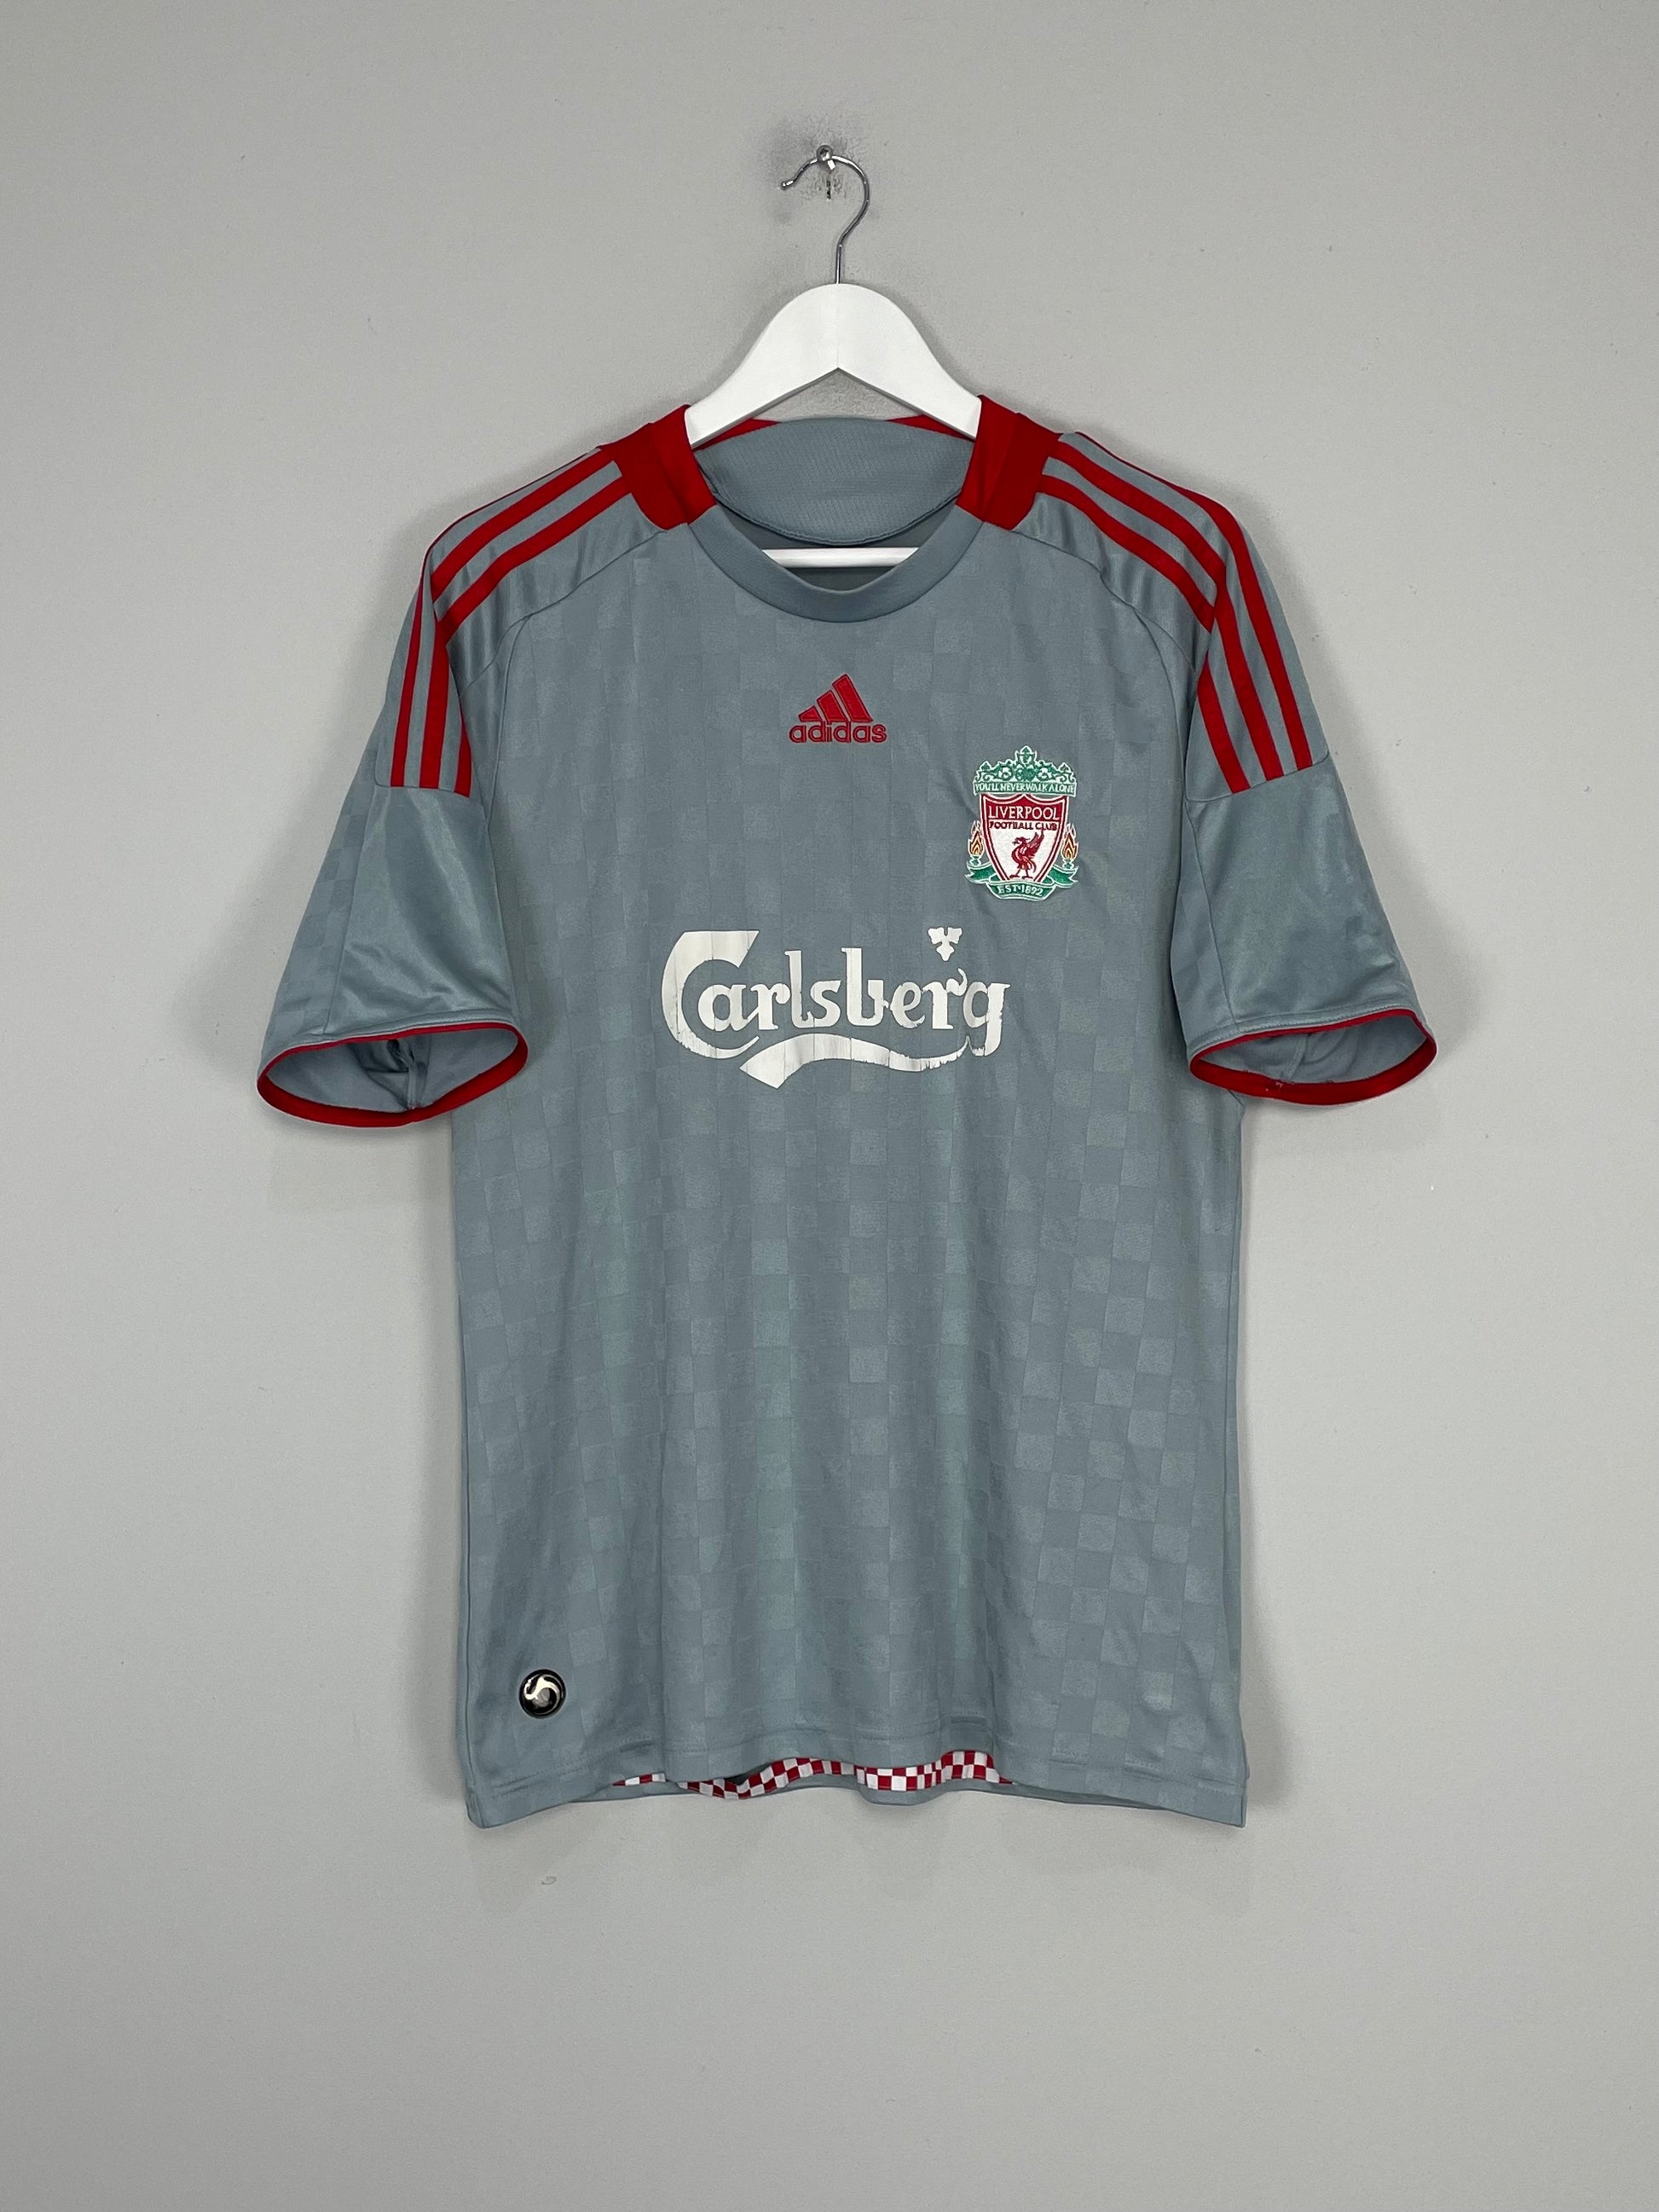 Liverpool 08/09 away kit Adidas - Football Shirt Culture - Latest